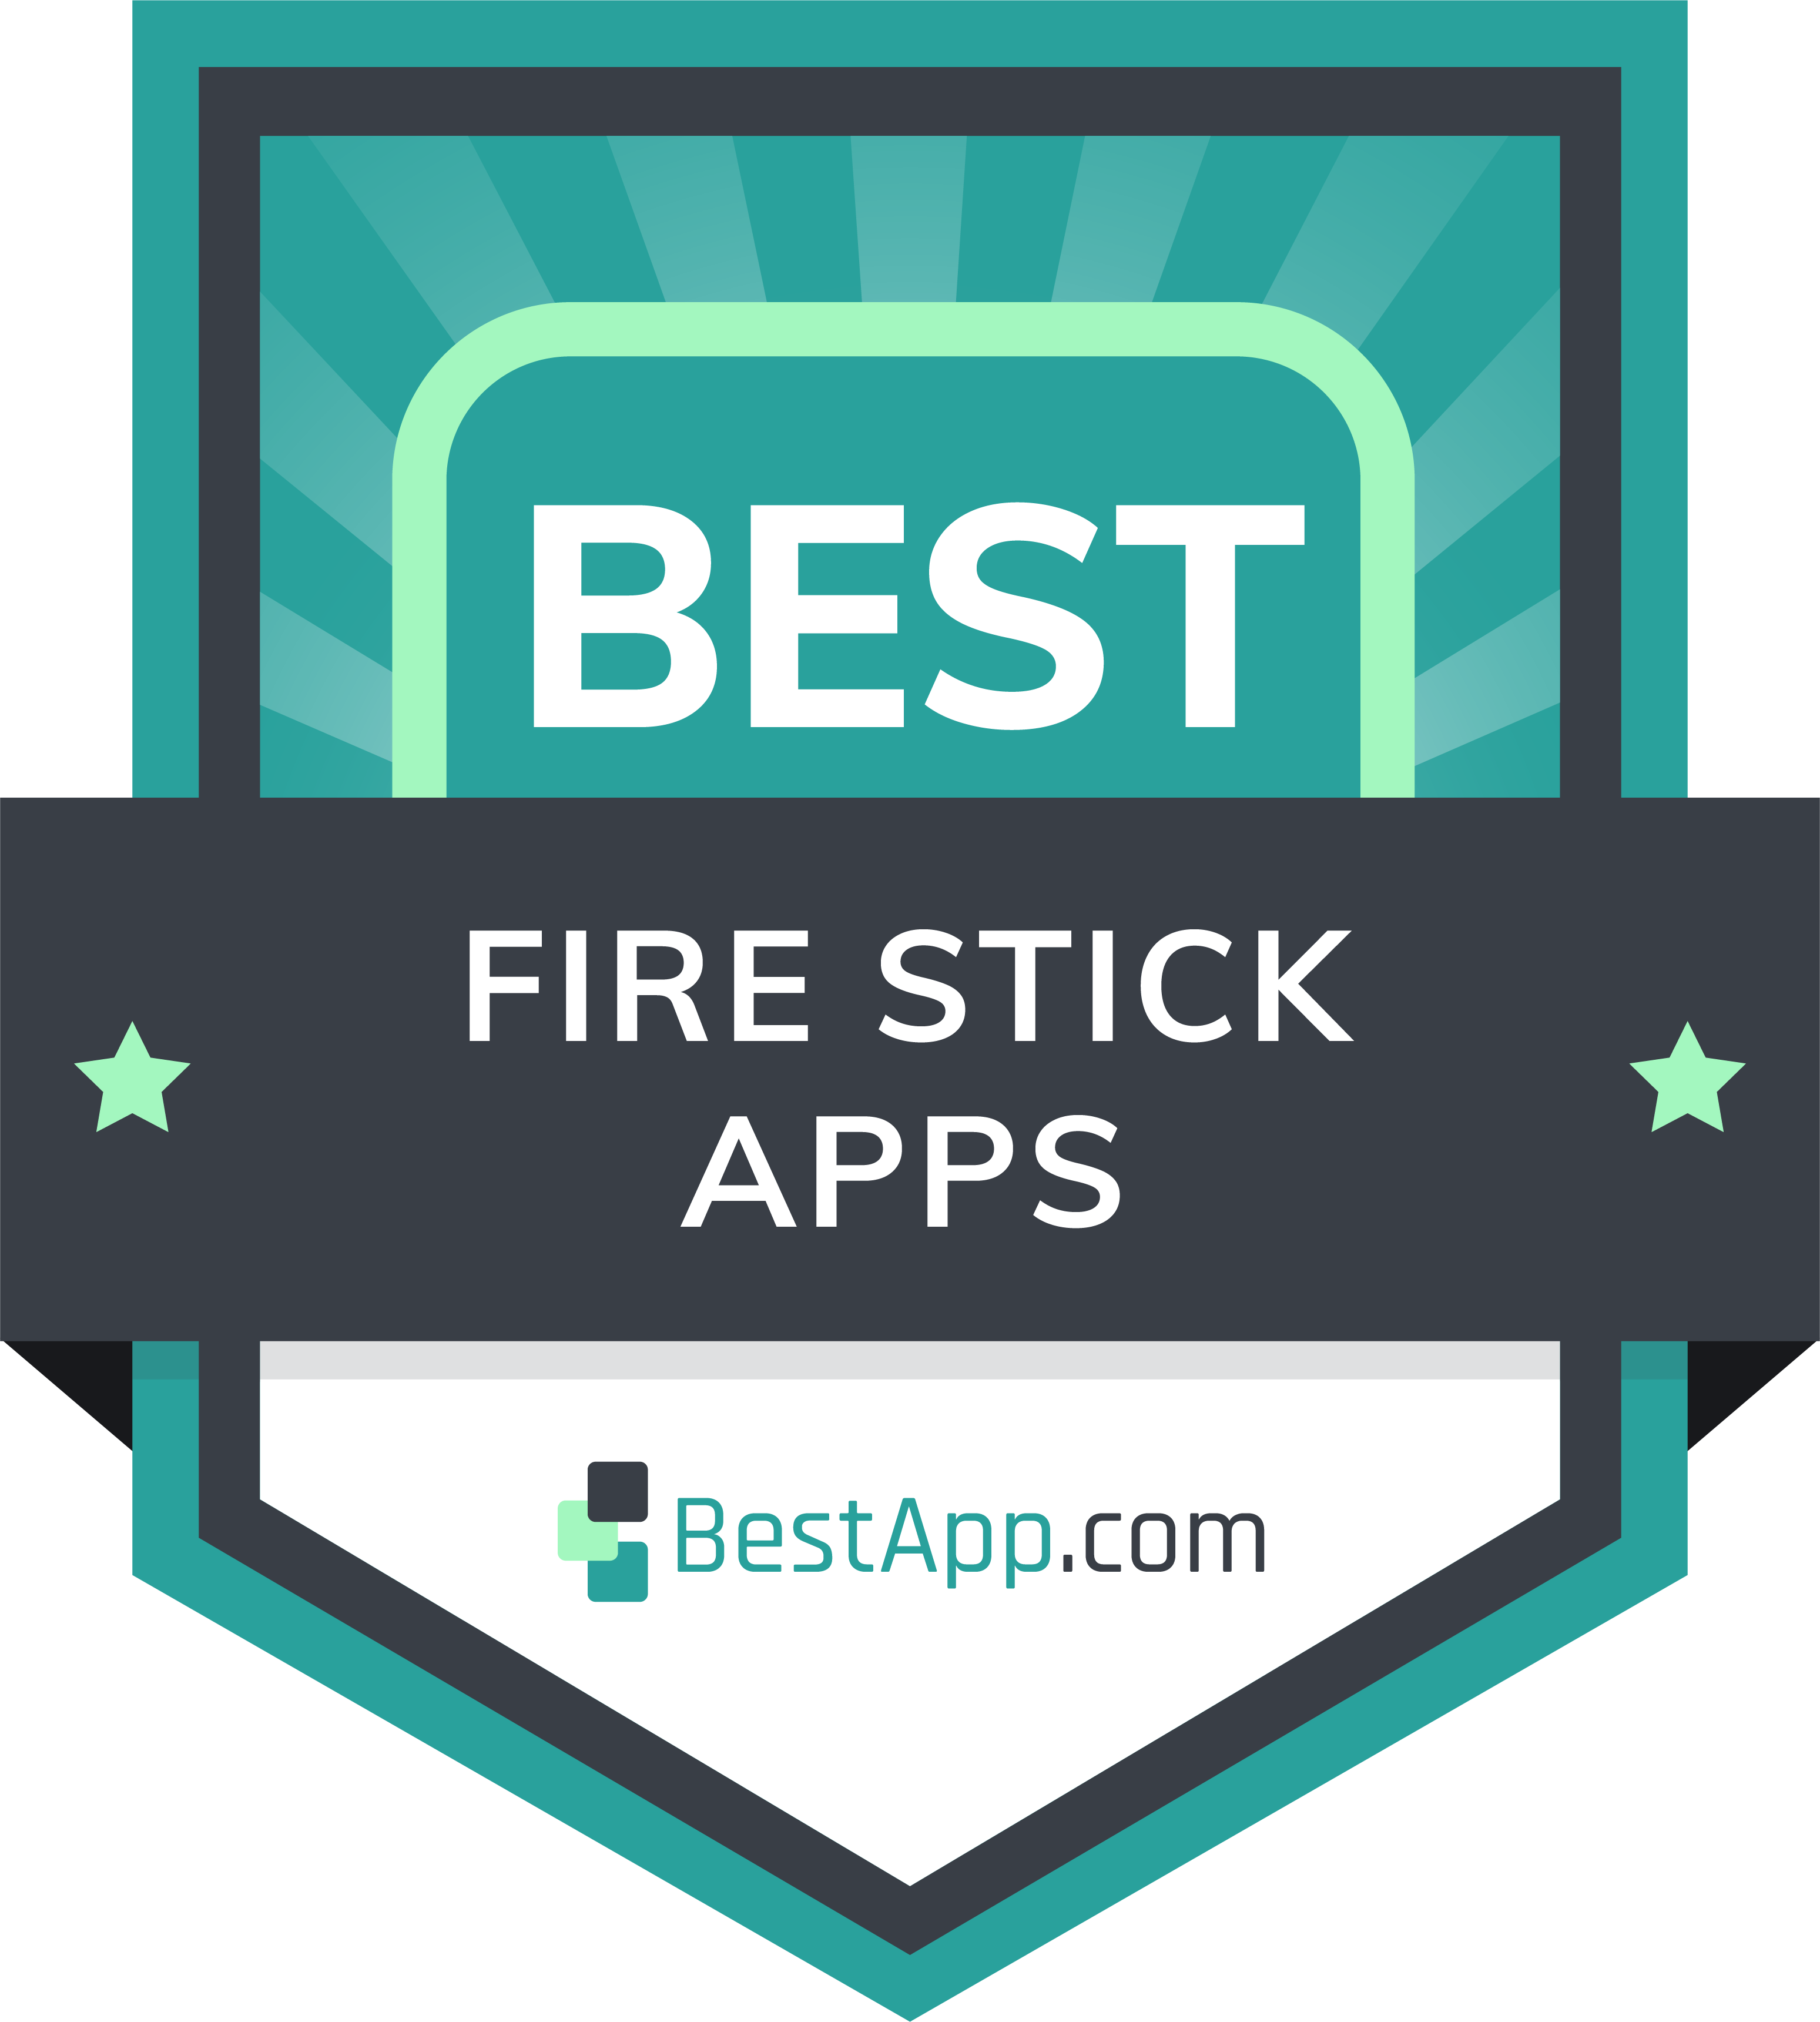 Best Fire Stick Apps Badge